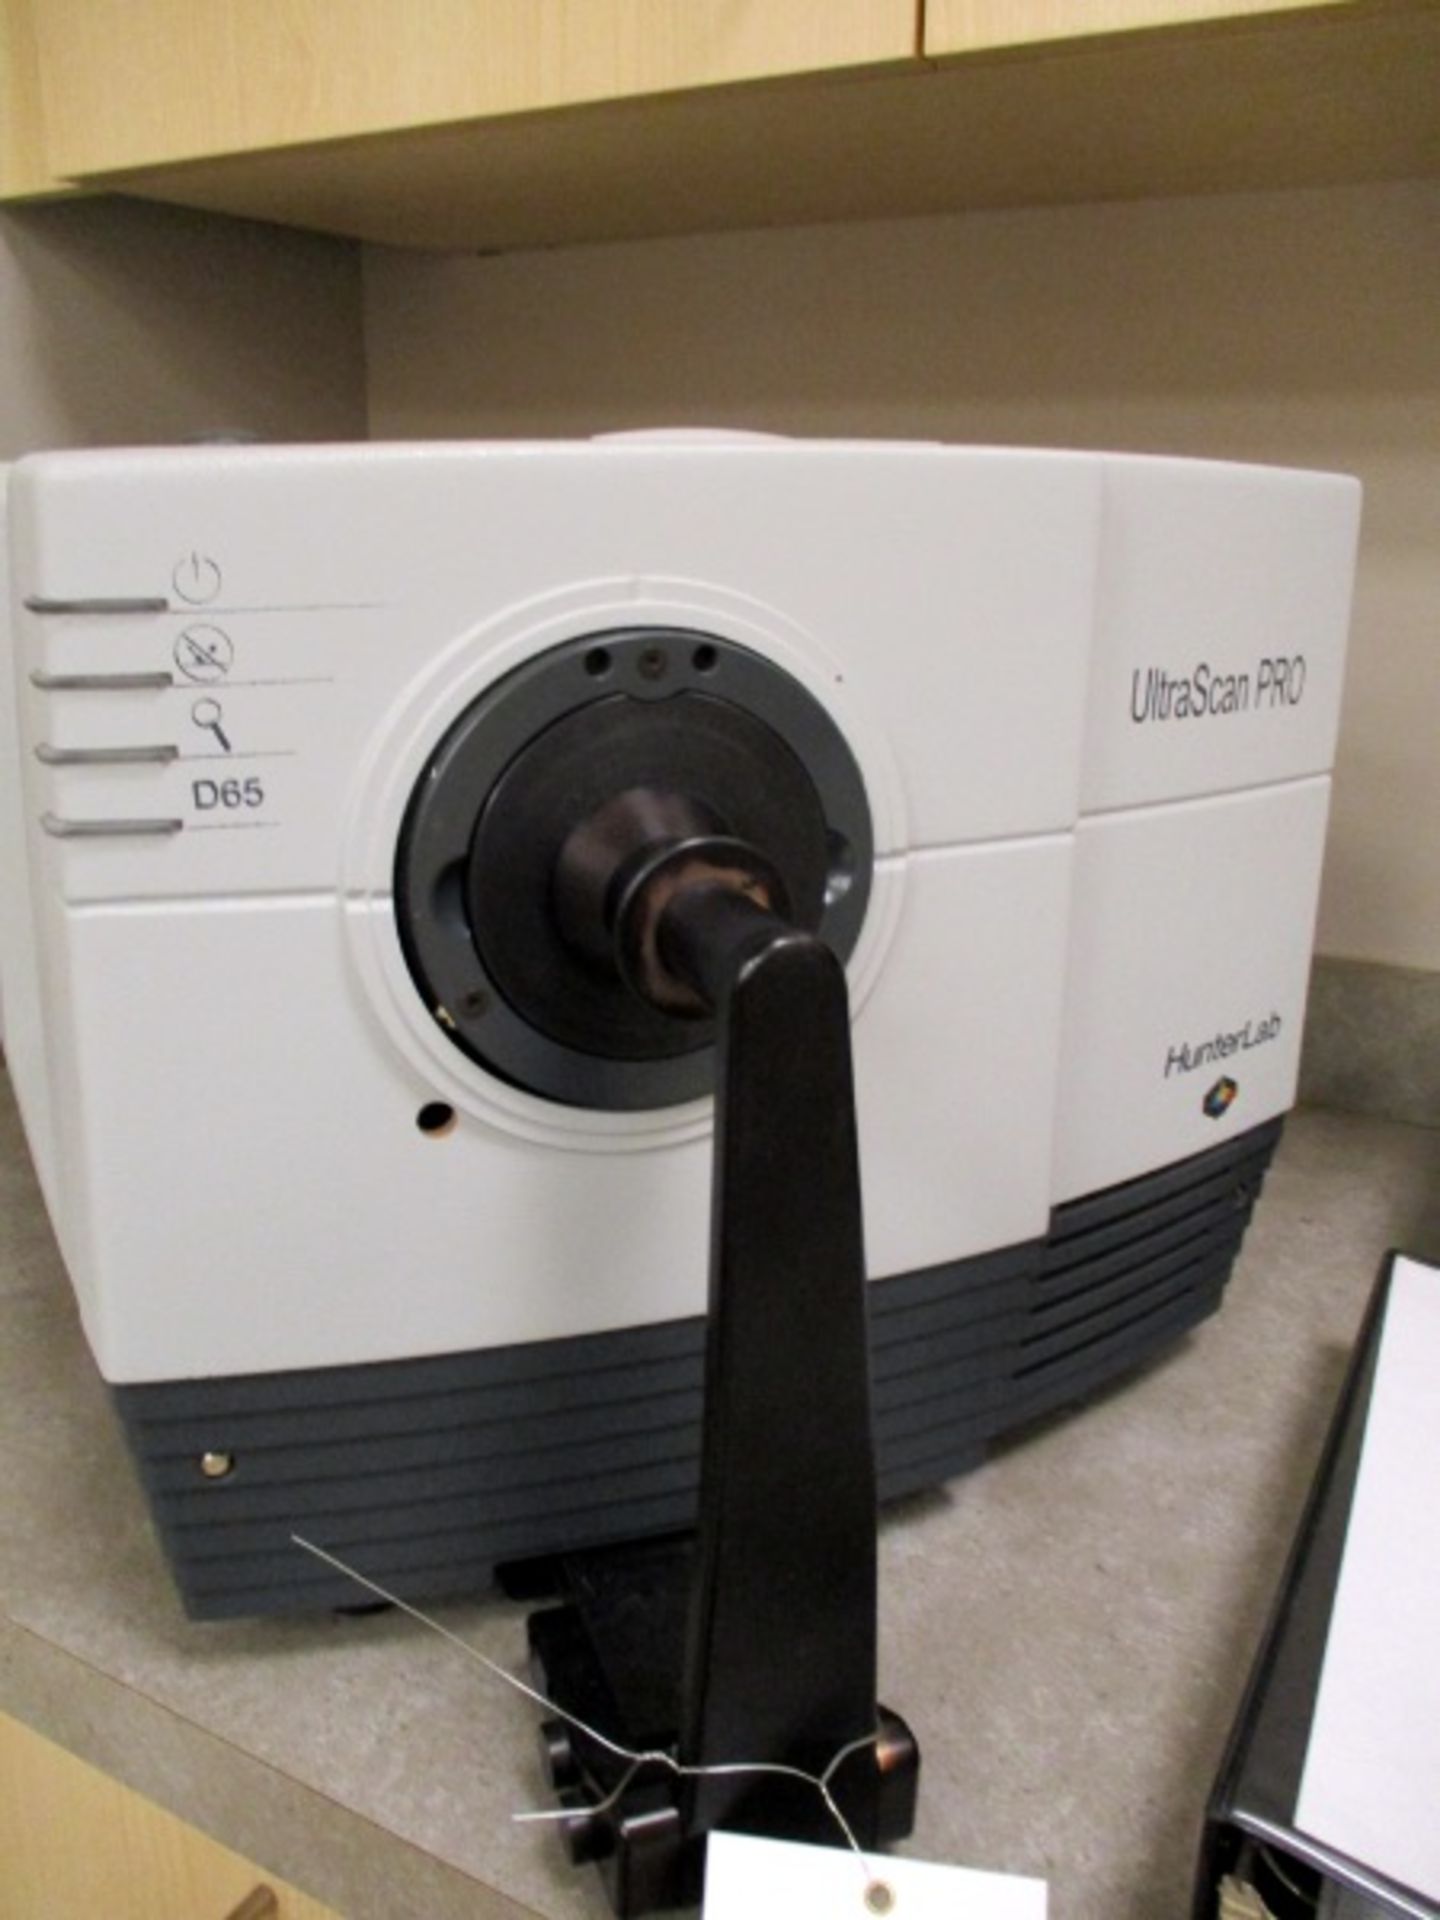 Hunterlab Ultra Scan Pro Spectrophotometer, S/N USP1545, Easymatch QC Software Version 4.22 - Image 2 of 4